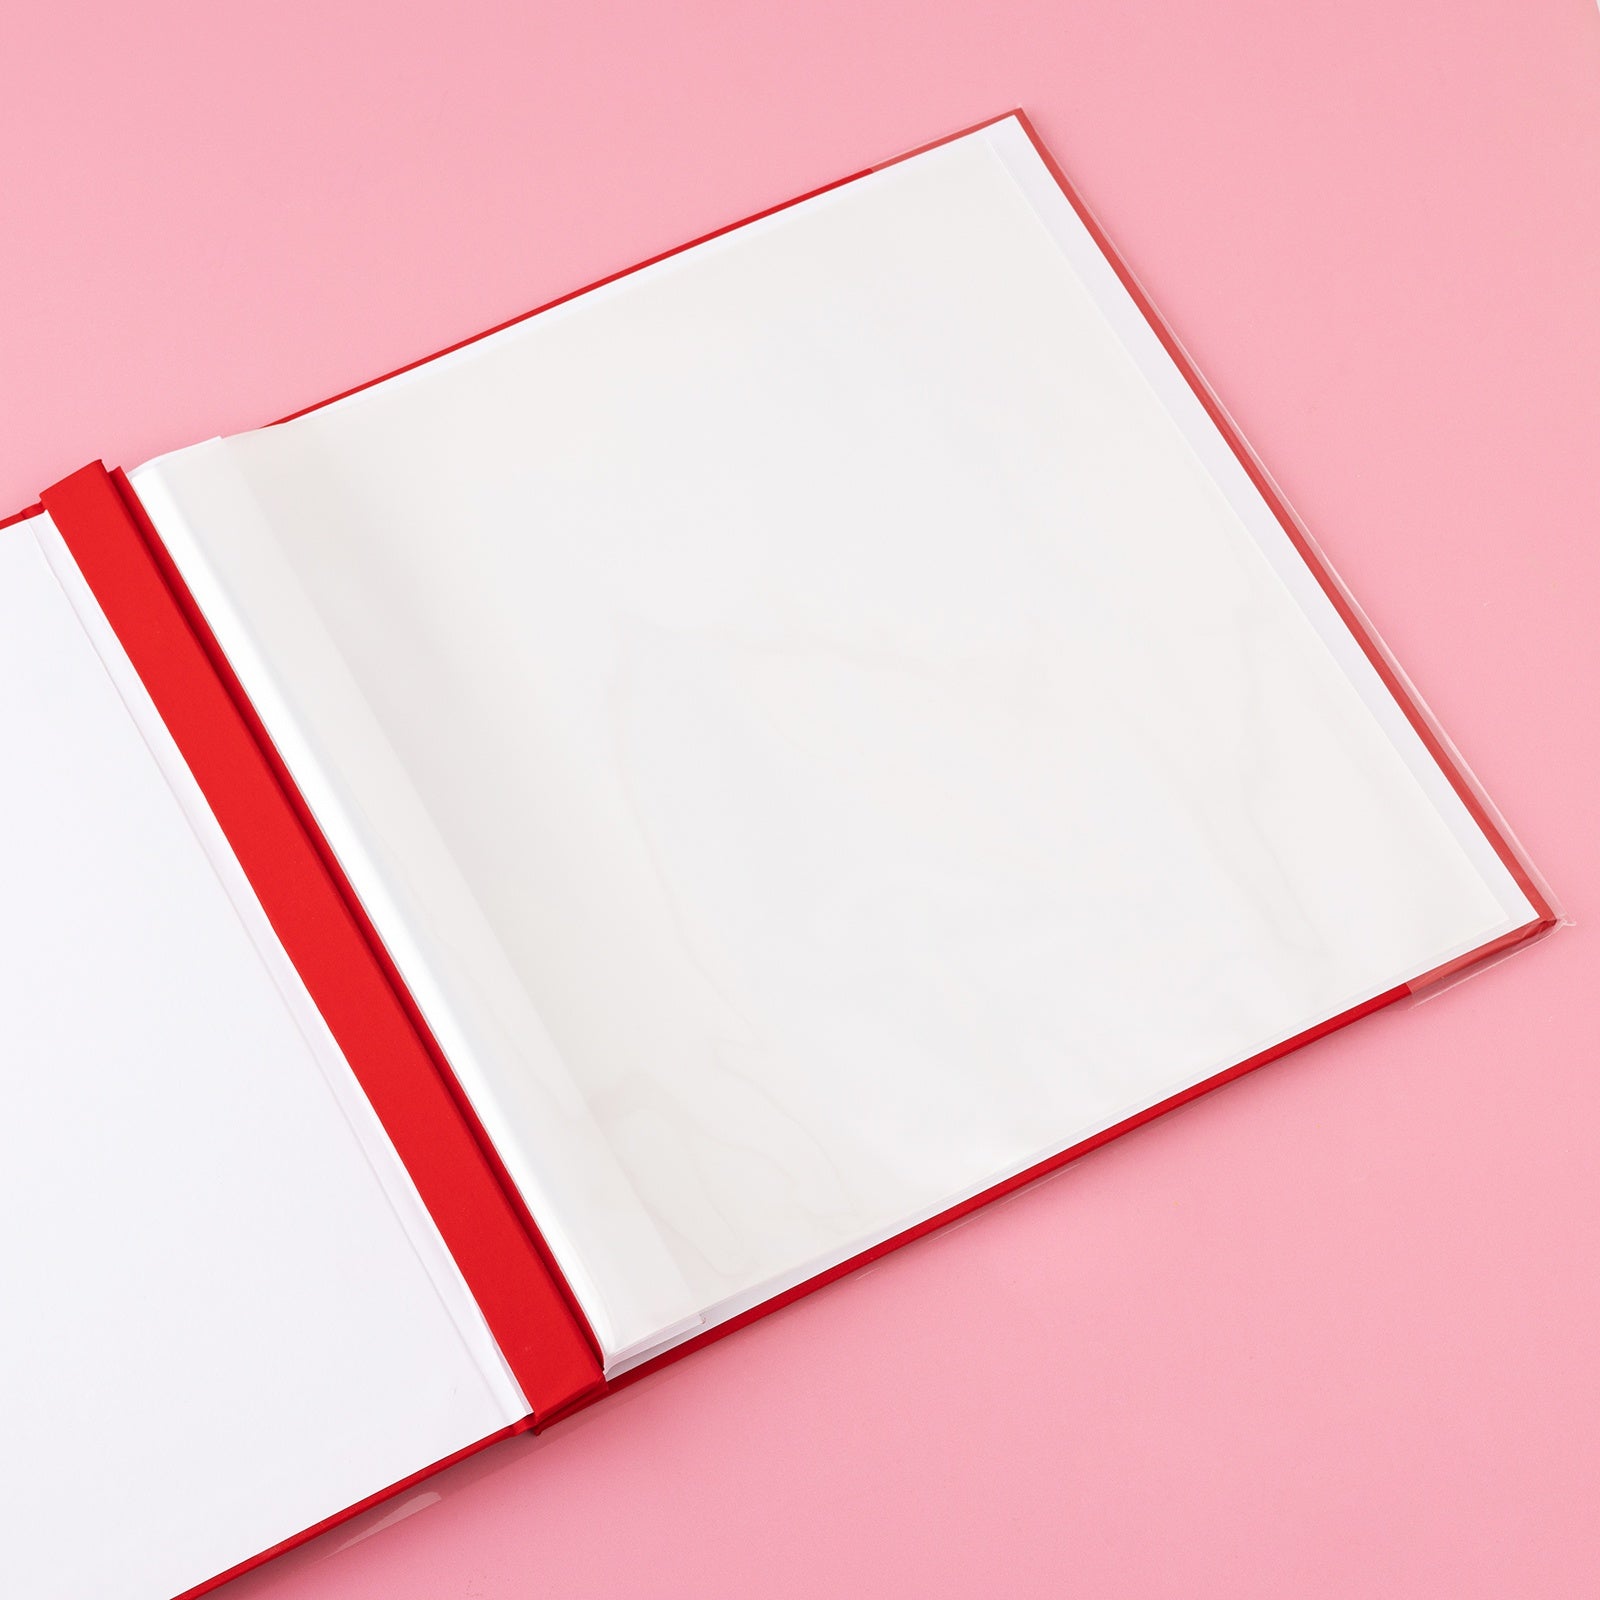 MBI Fashion Fabric Post Bound Album 12 x 12-Inch, Red